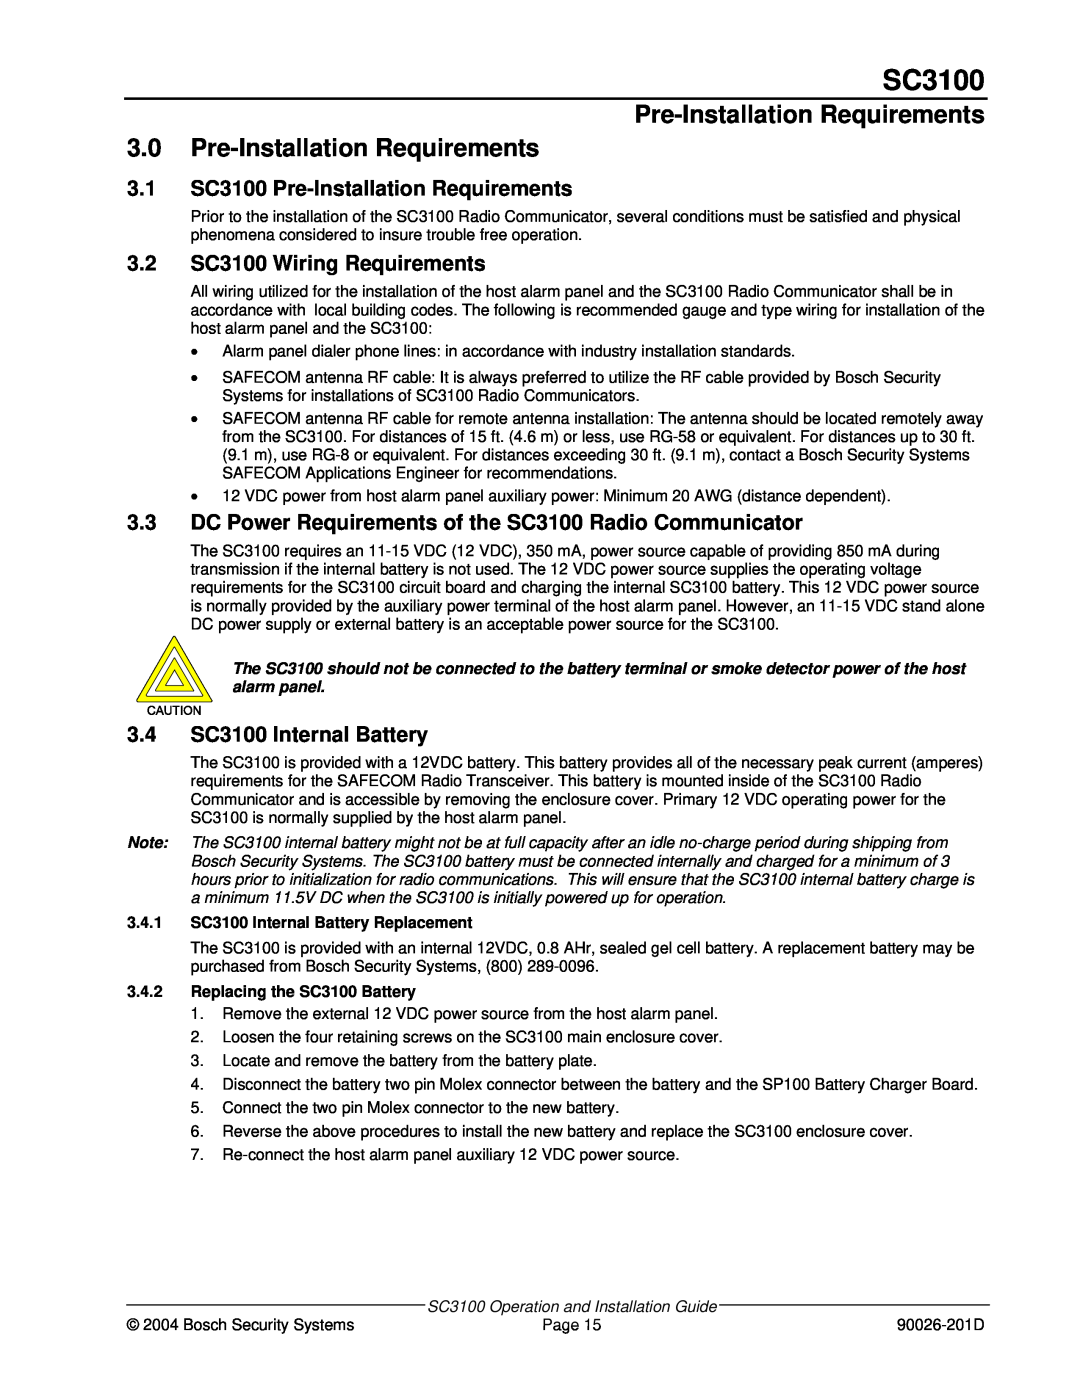 Bosch Appliances manual 3.0Pre-InstallationRequirements, 3.1SC3100 Pre-InstallationRequirements 